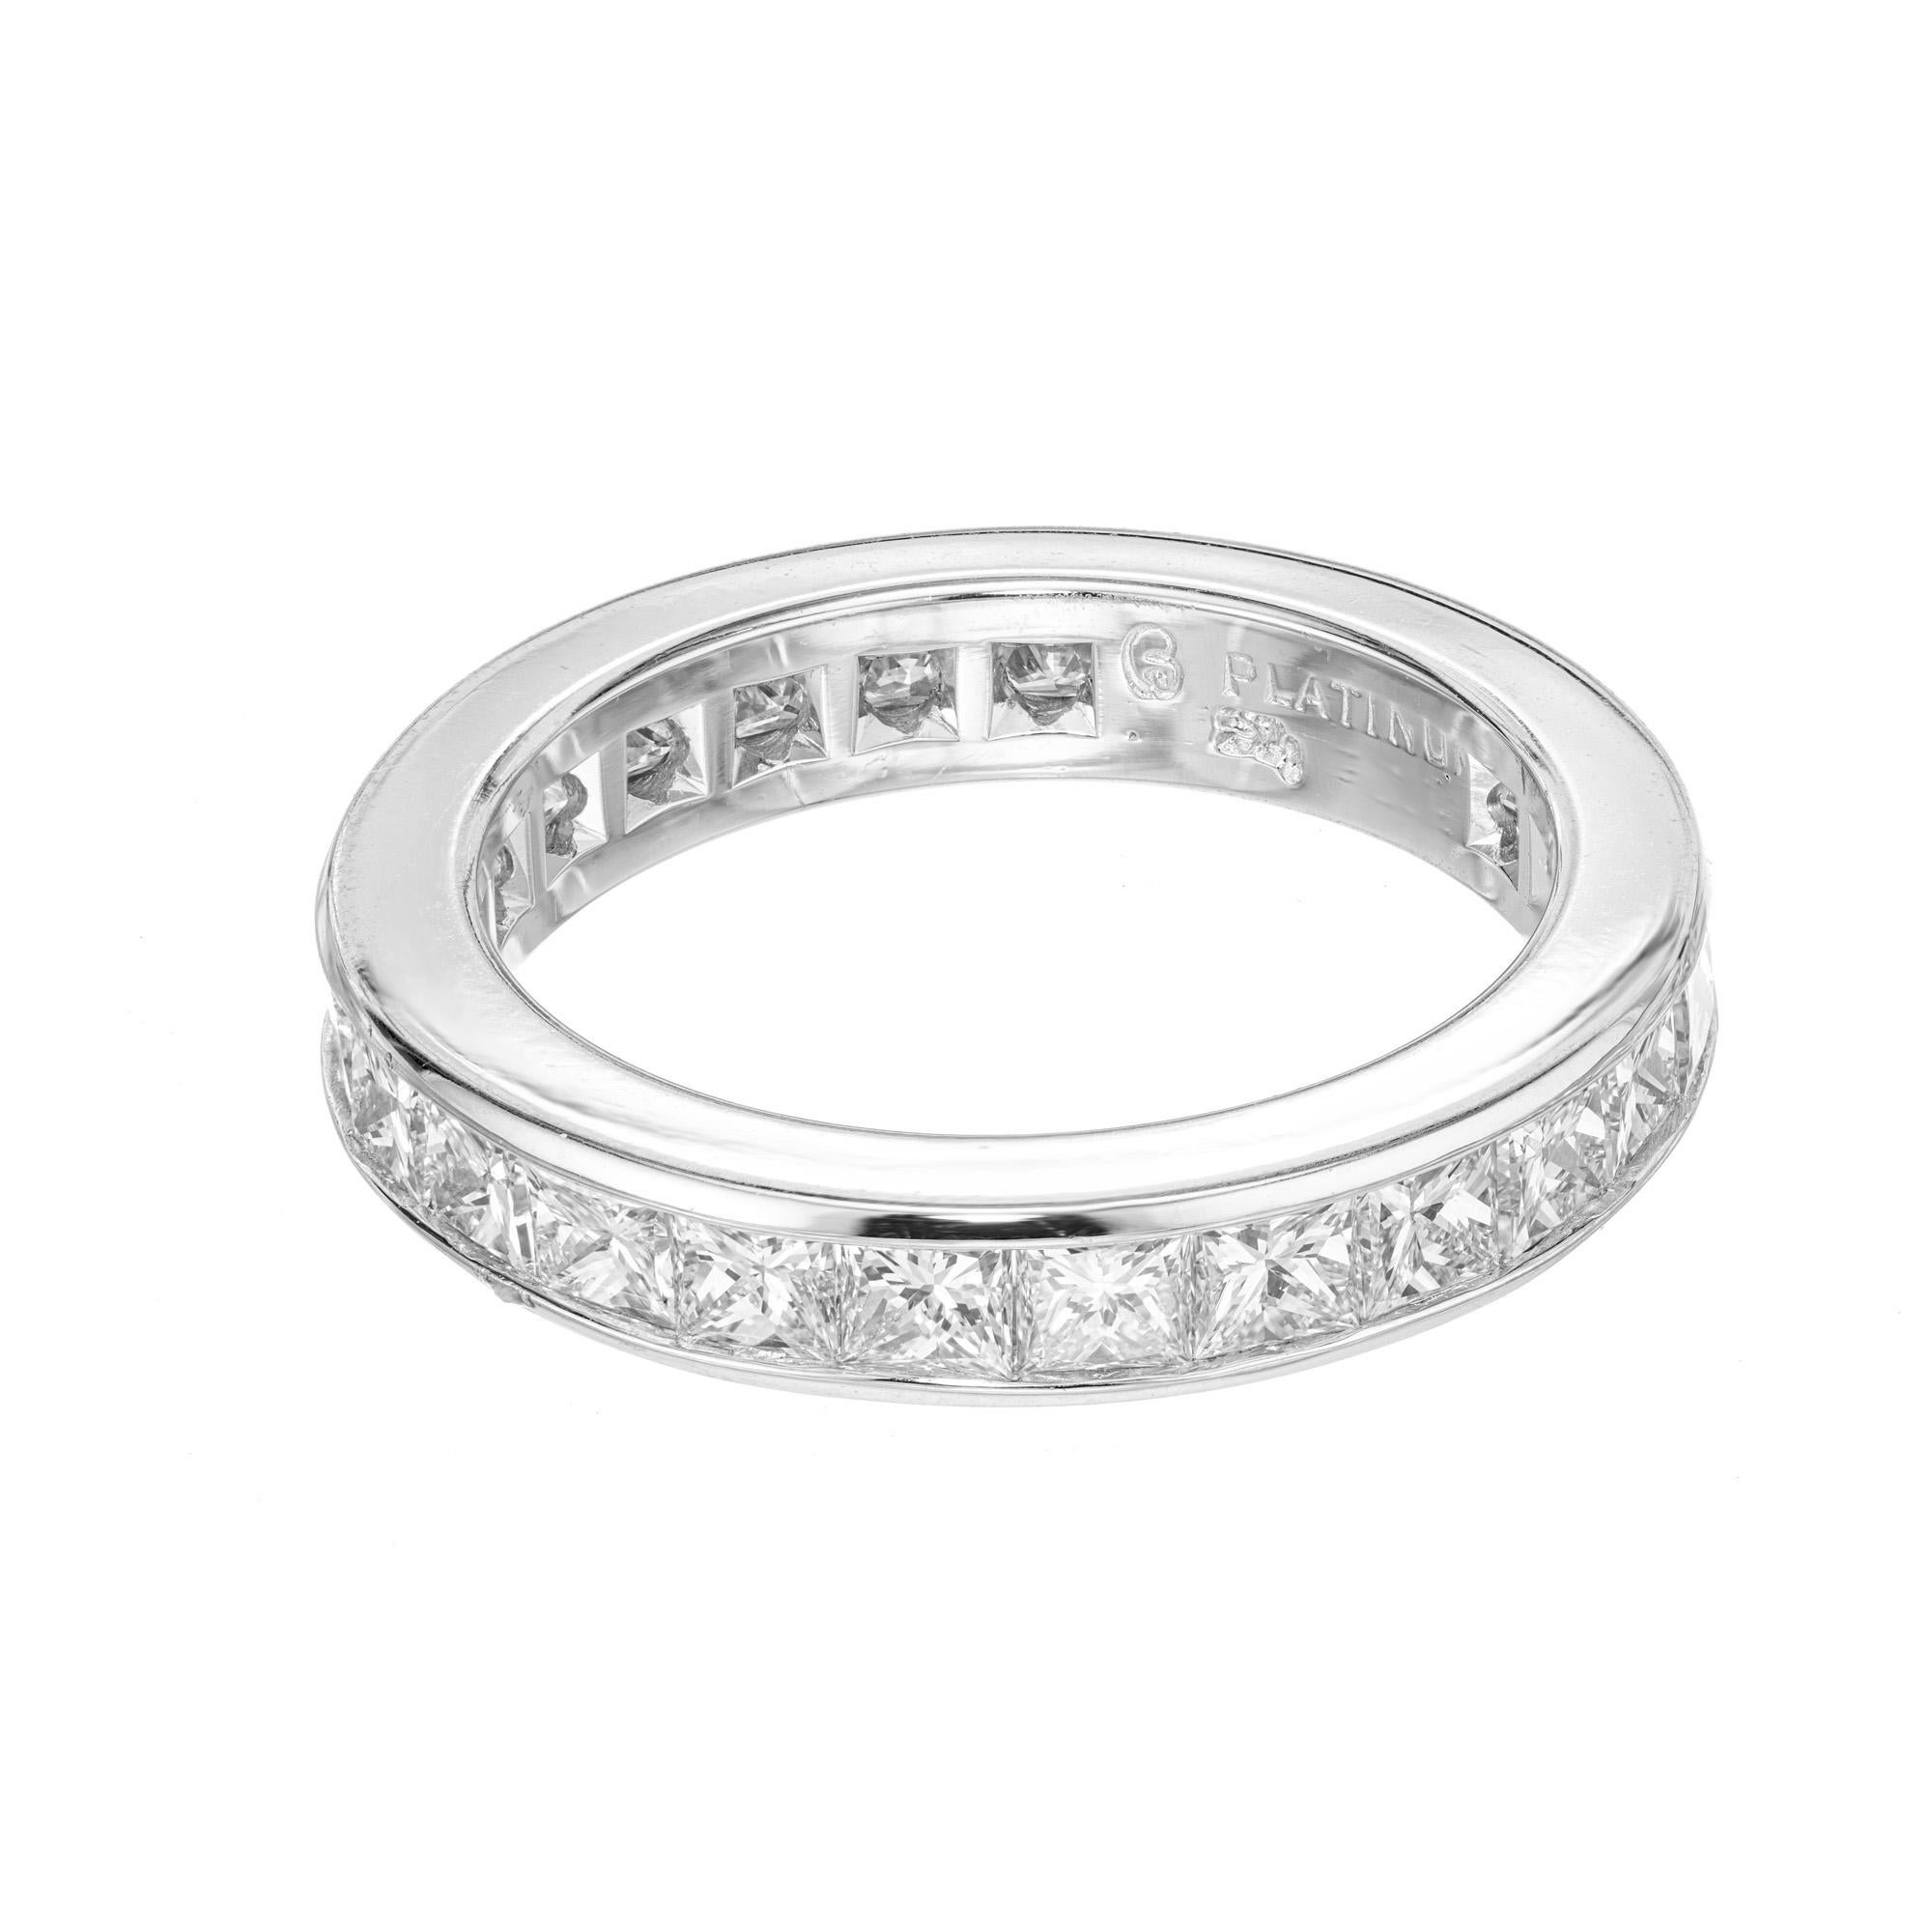 Princess Cut Byard F. Brogan 2.40 Carat Diamond Platinum Eternity Wedding Band Ring For Sale